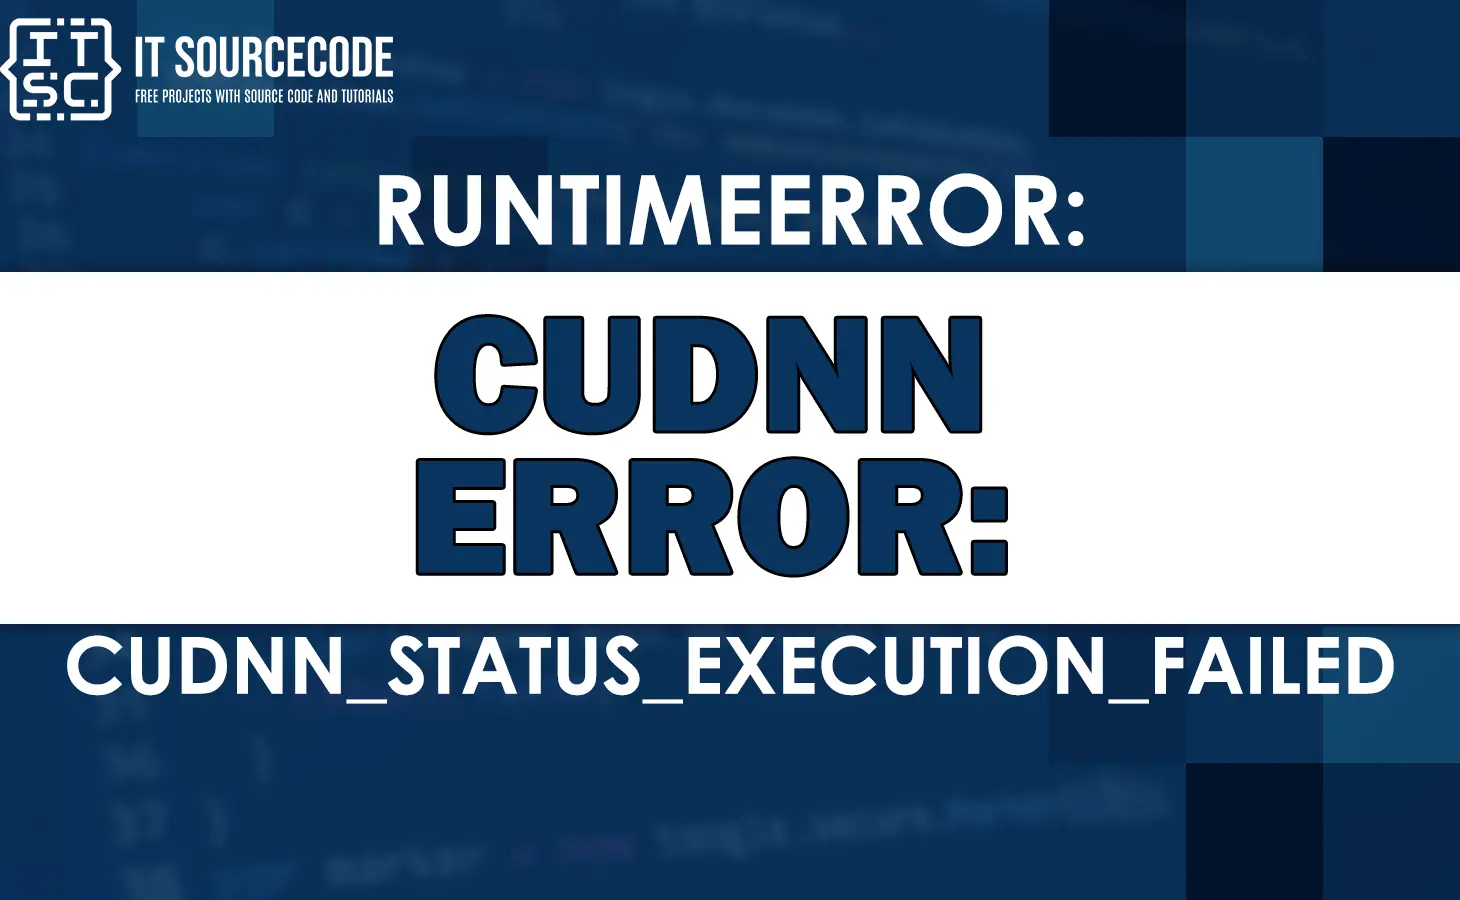 runtimeerror cudnn error cudnn_status_execution_failed